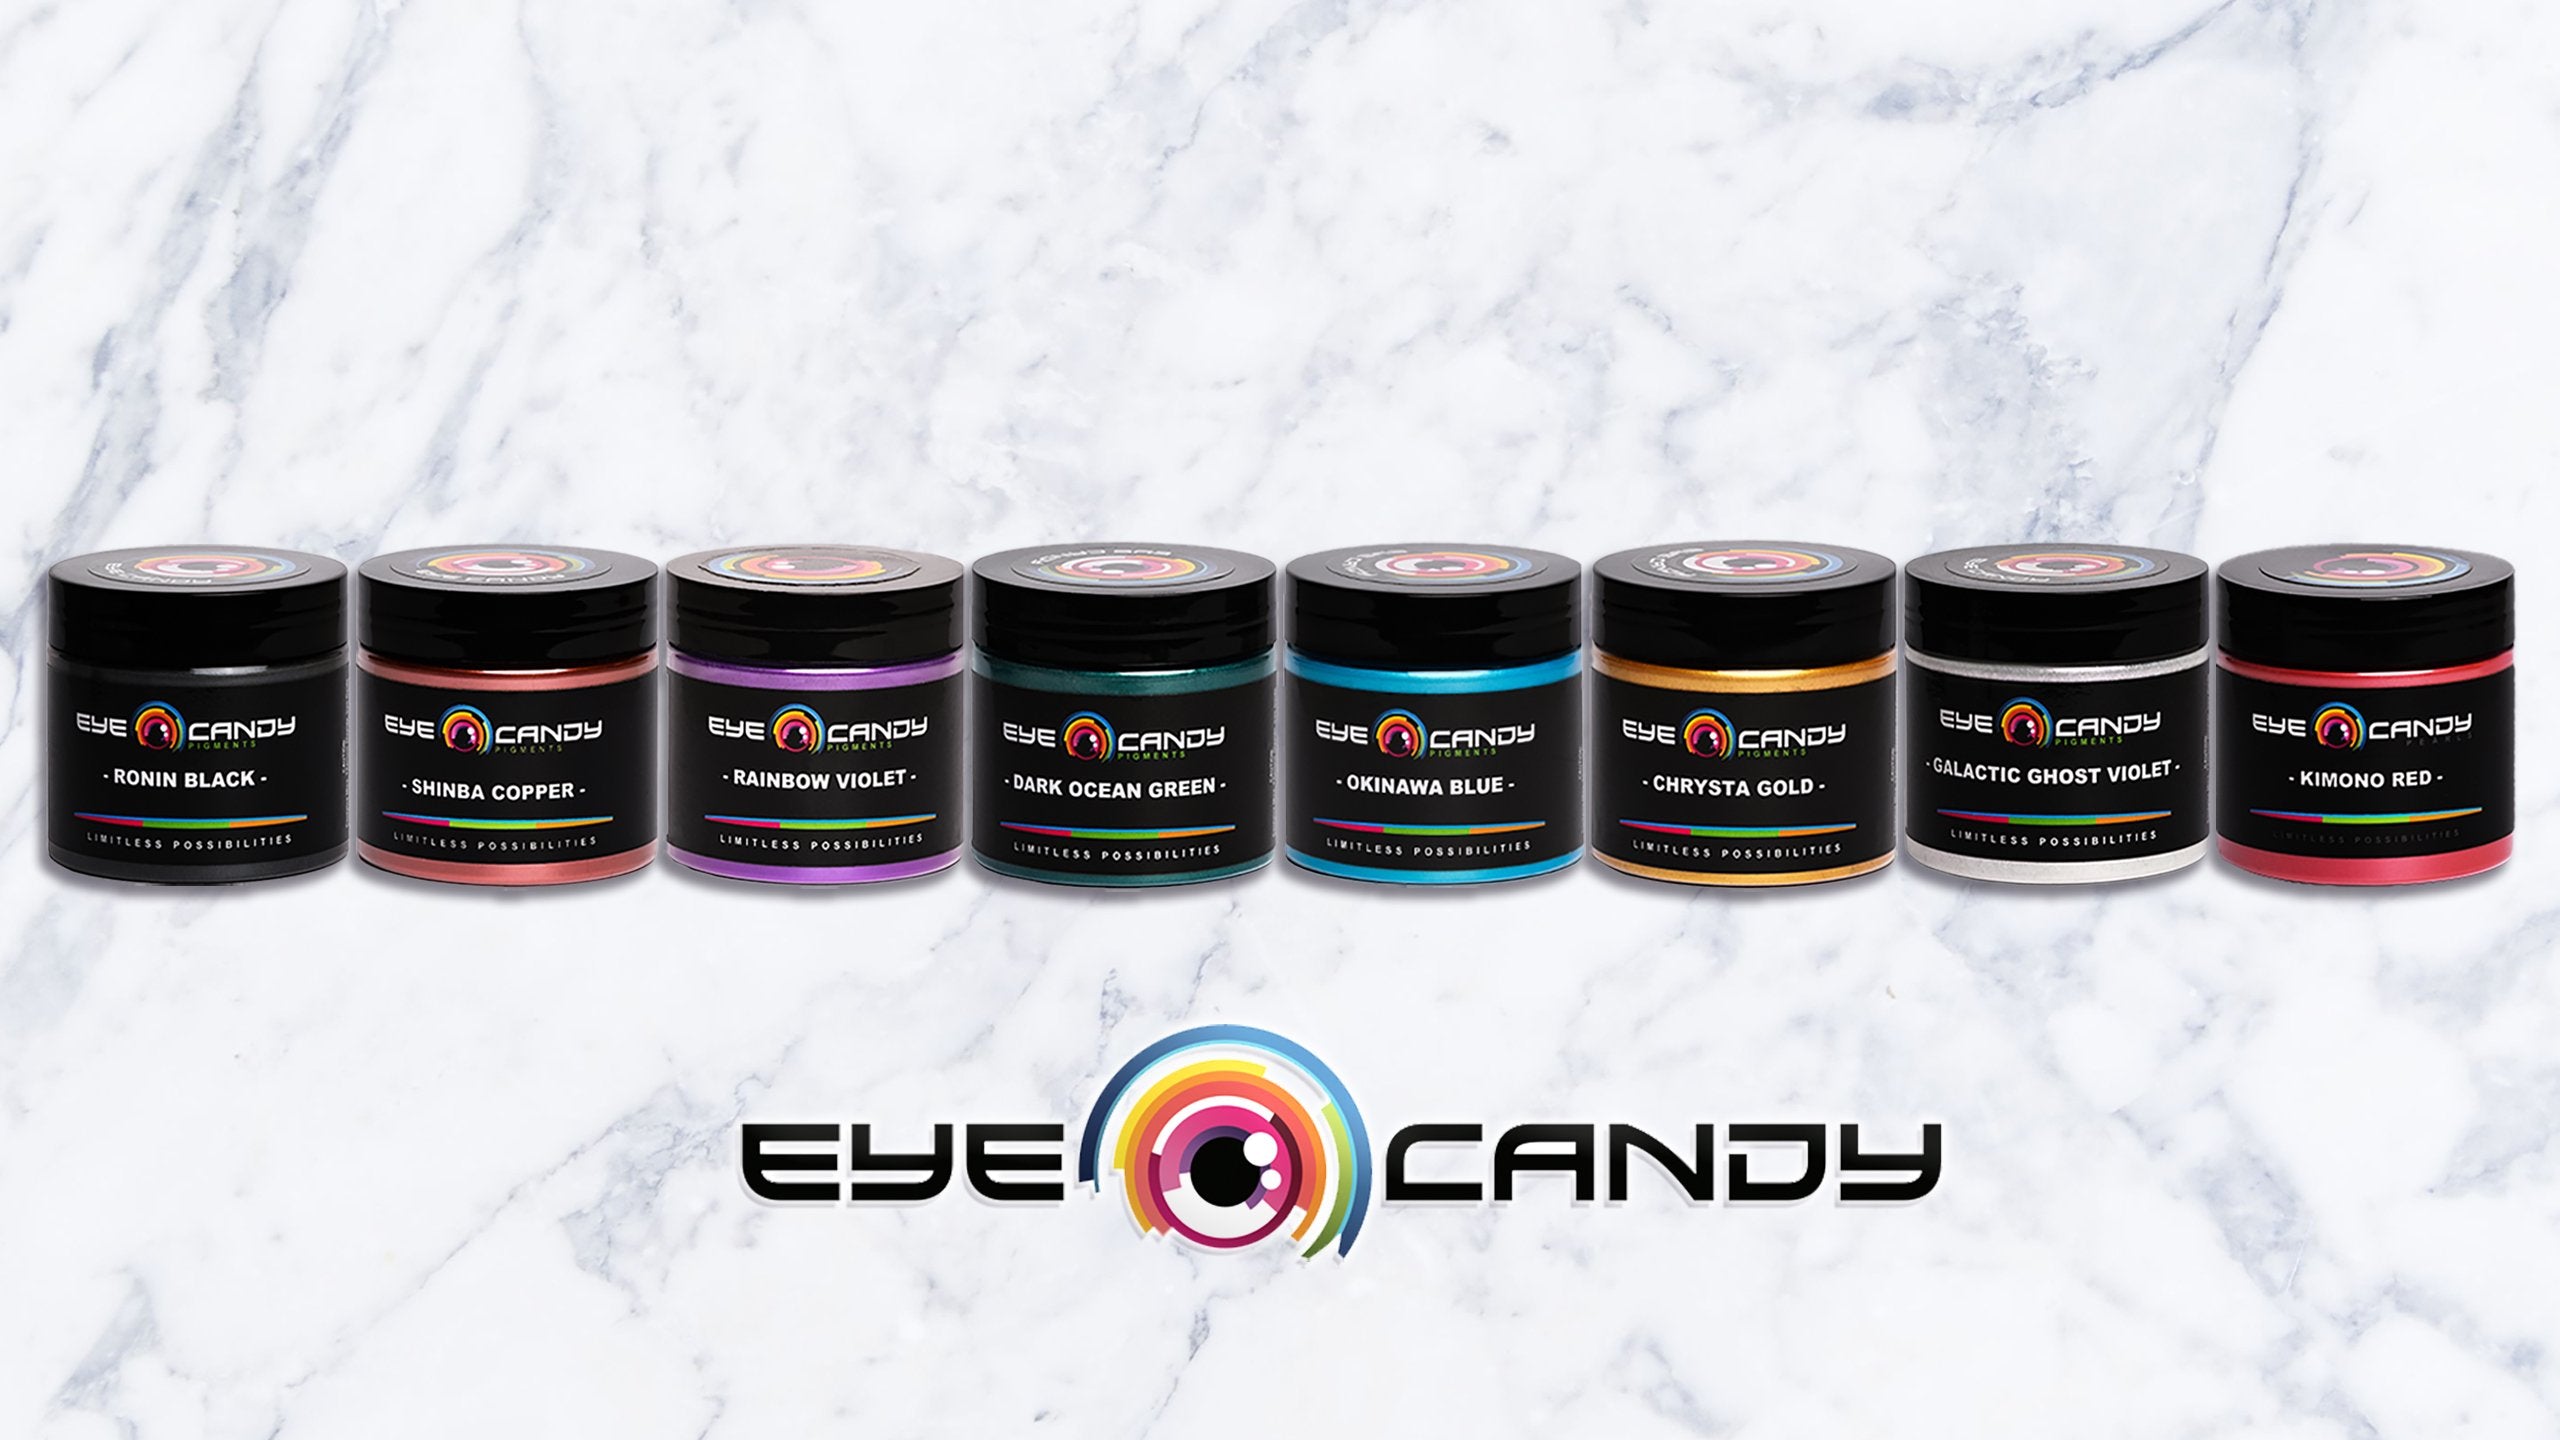 Eye Candy Premium Mica Powder Pigment “Sumi Black” (50g) Multipurpose DIY  Arts and Crafts Additive